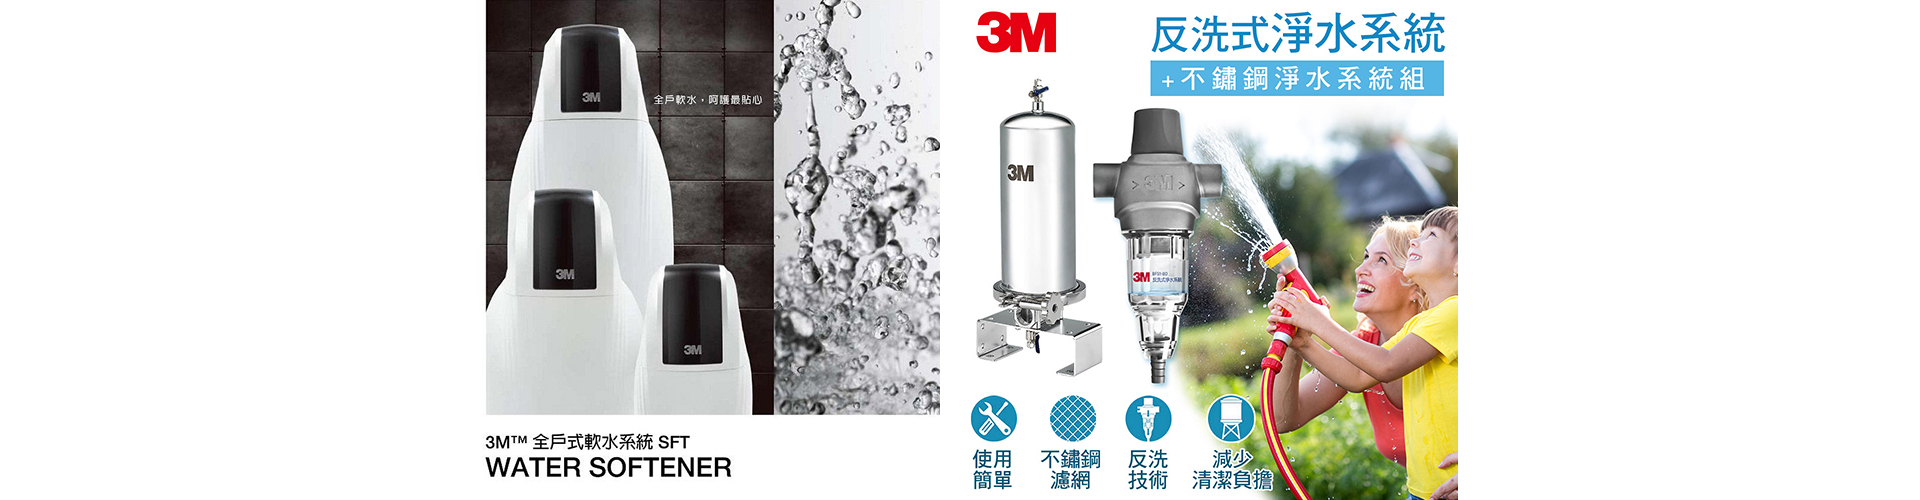 3M 反洗式淨水系統